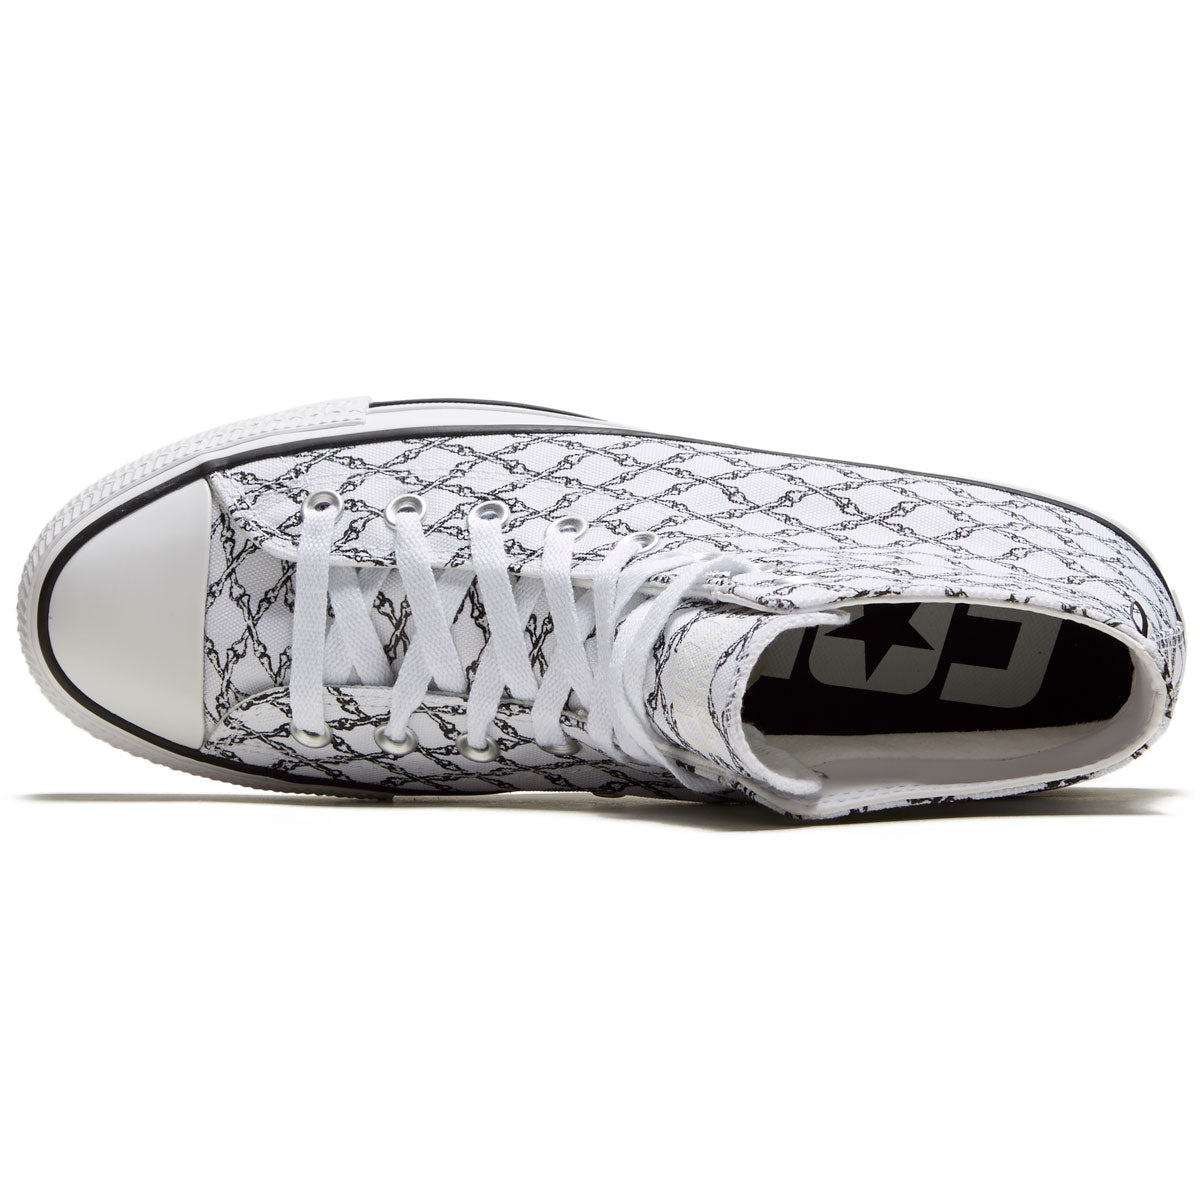 Converse Chuck Taylor All Star Pro Hi Shoes - White/Black/White – CCS